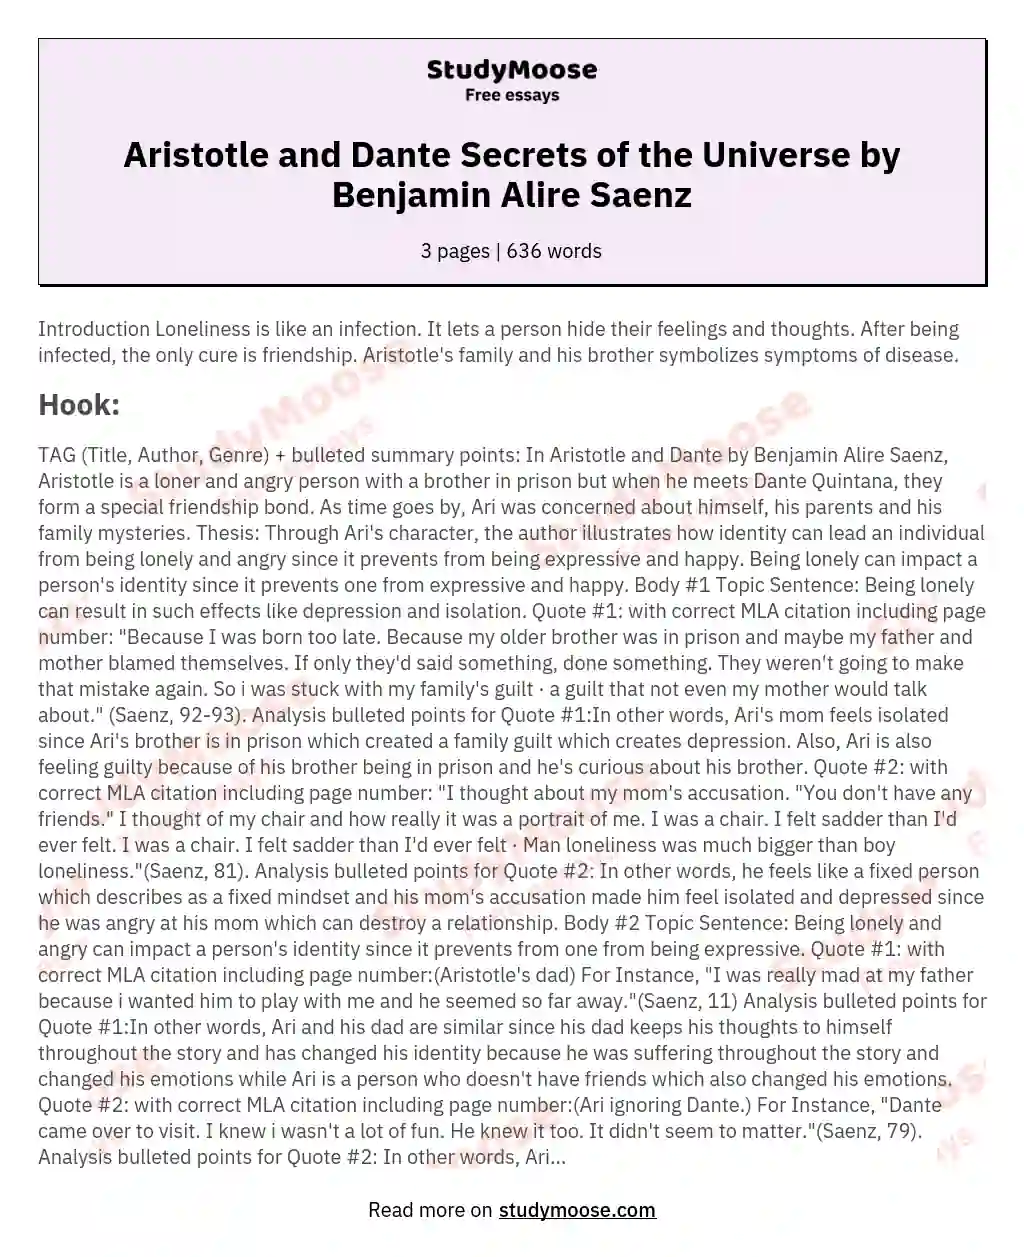 Aristotle and Dante Secrets of the Universe by Benjamin Alire Saenz essay